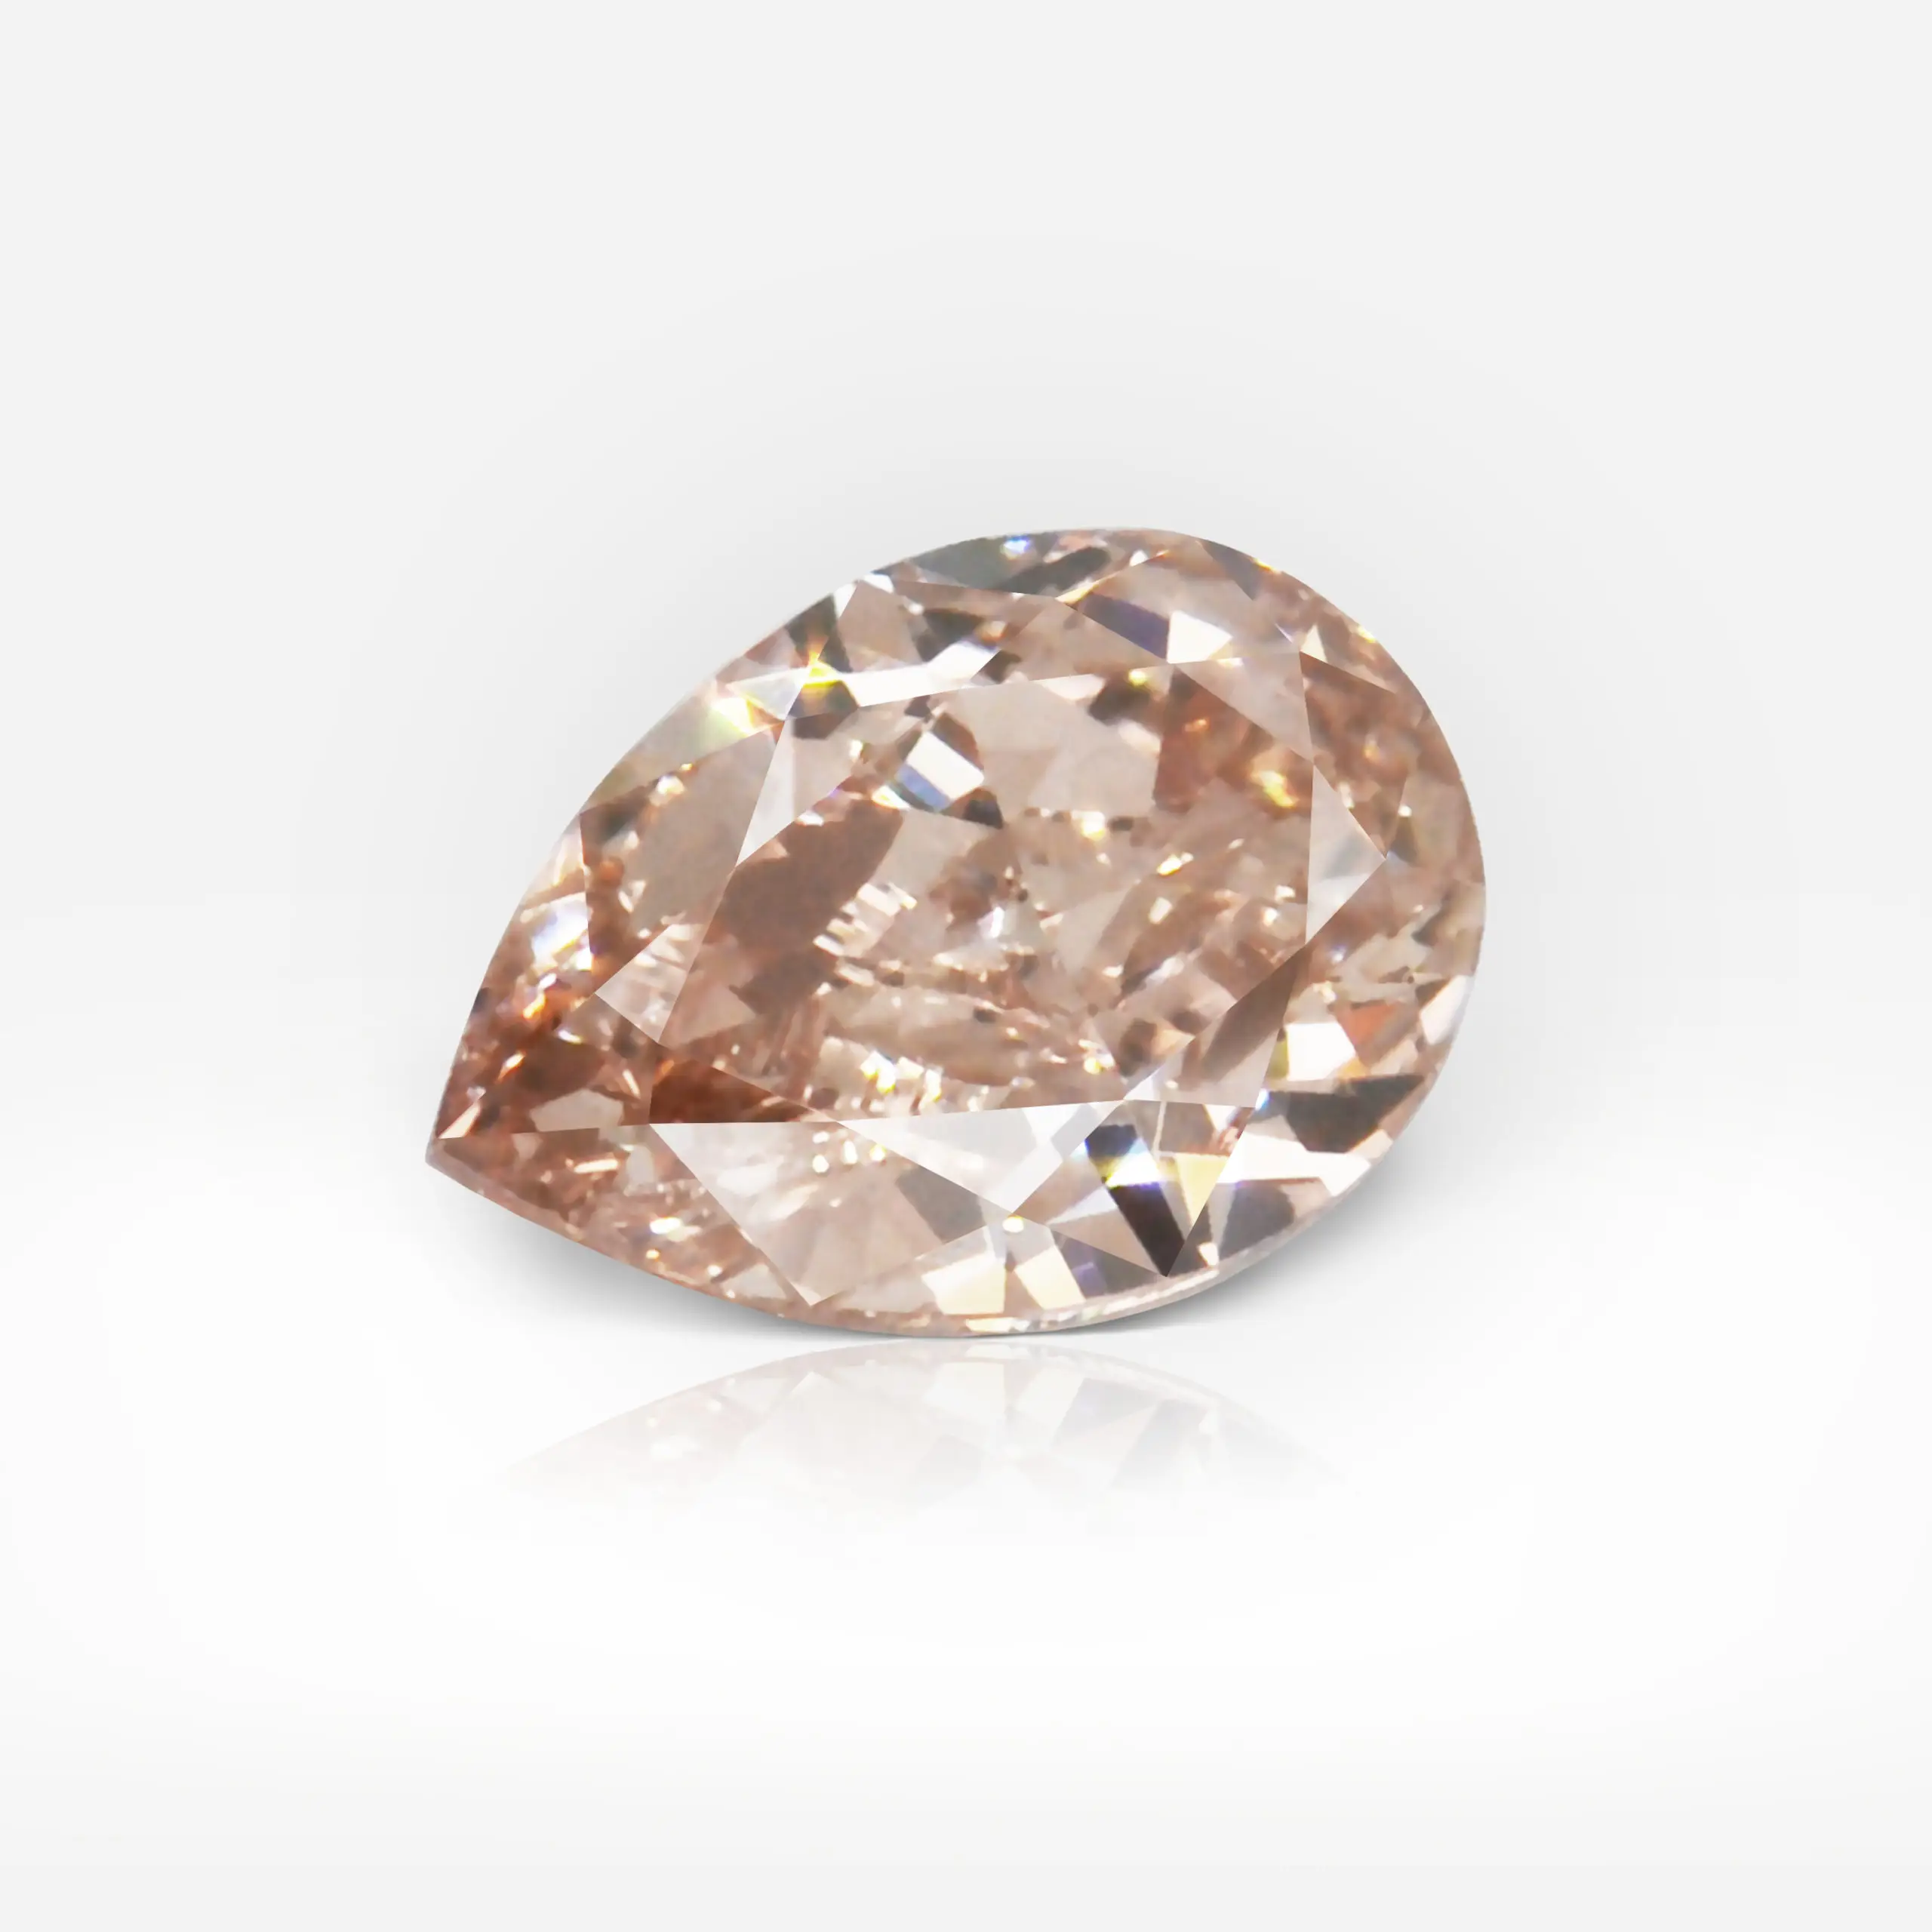 0.39 carat Fancy Brown Pink VS1 Pear Shape Diamond GIA - picture 1